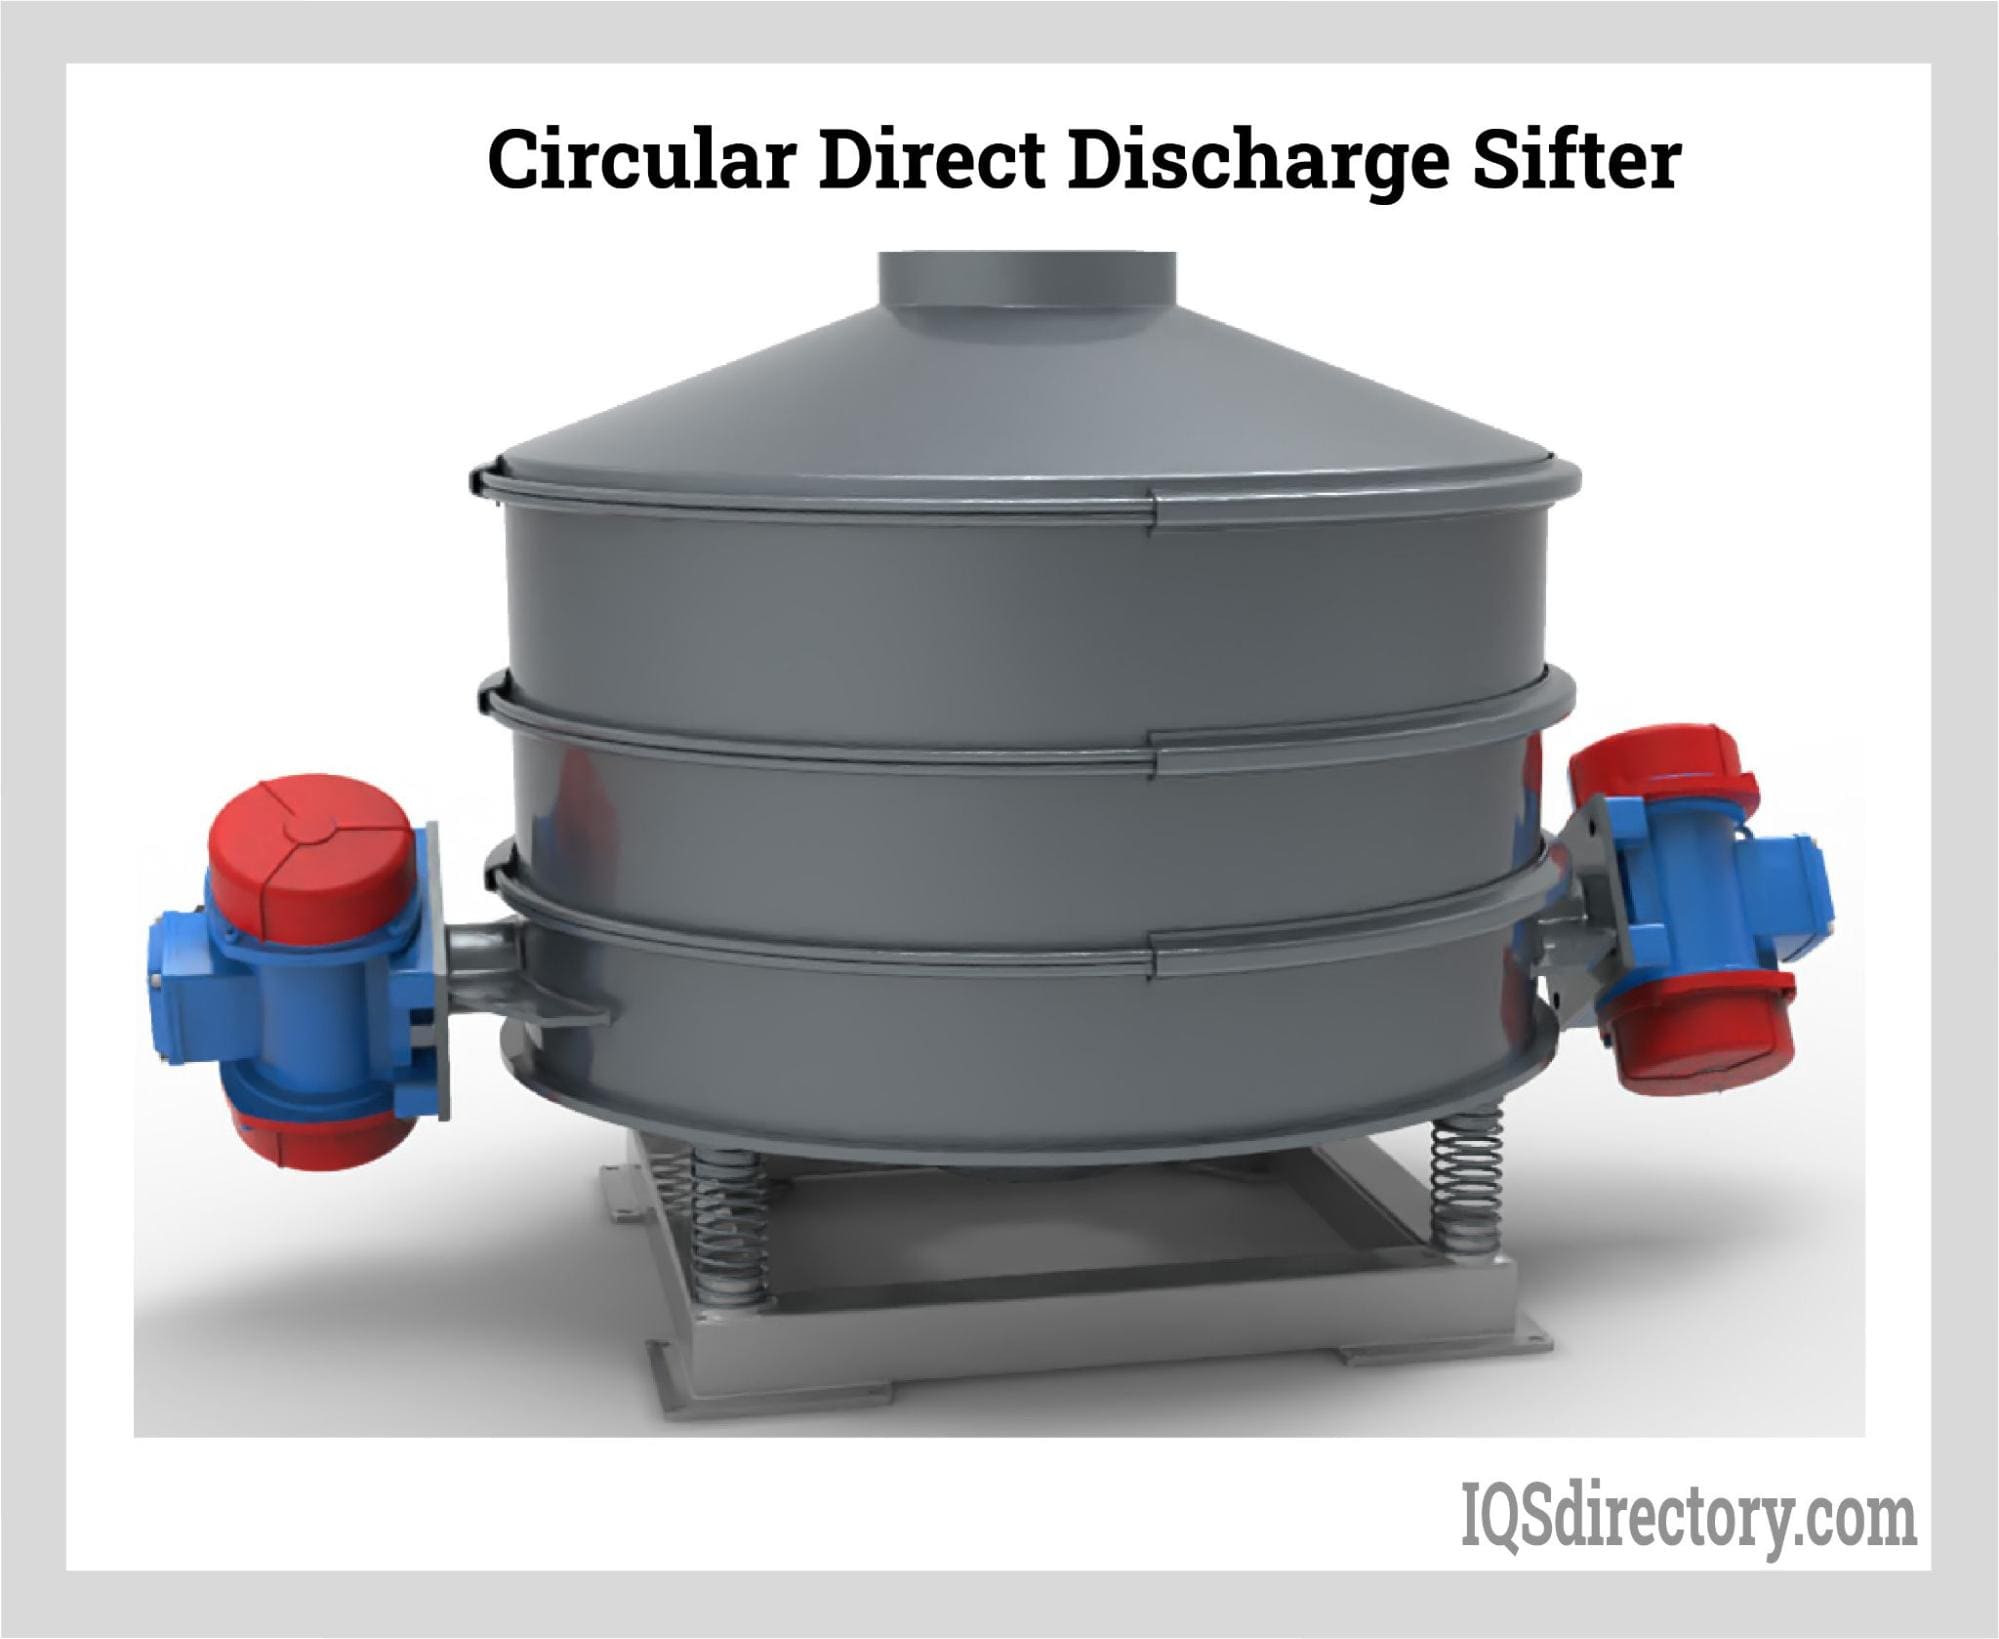 Circular Direct Discharge Sifter